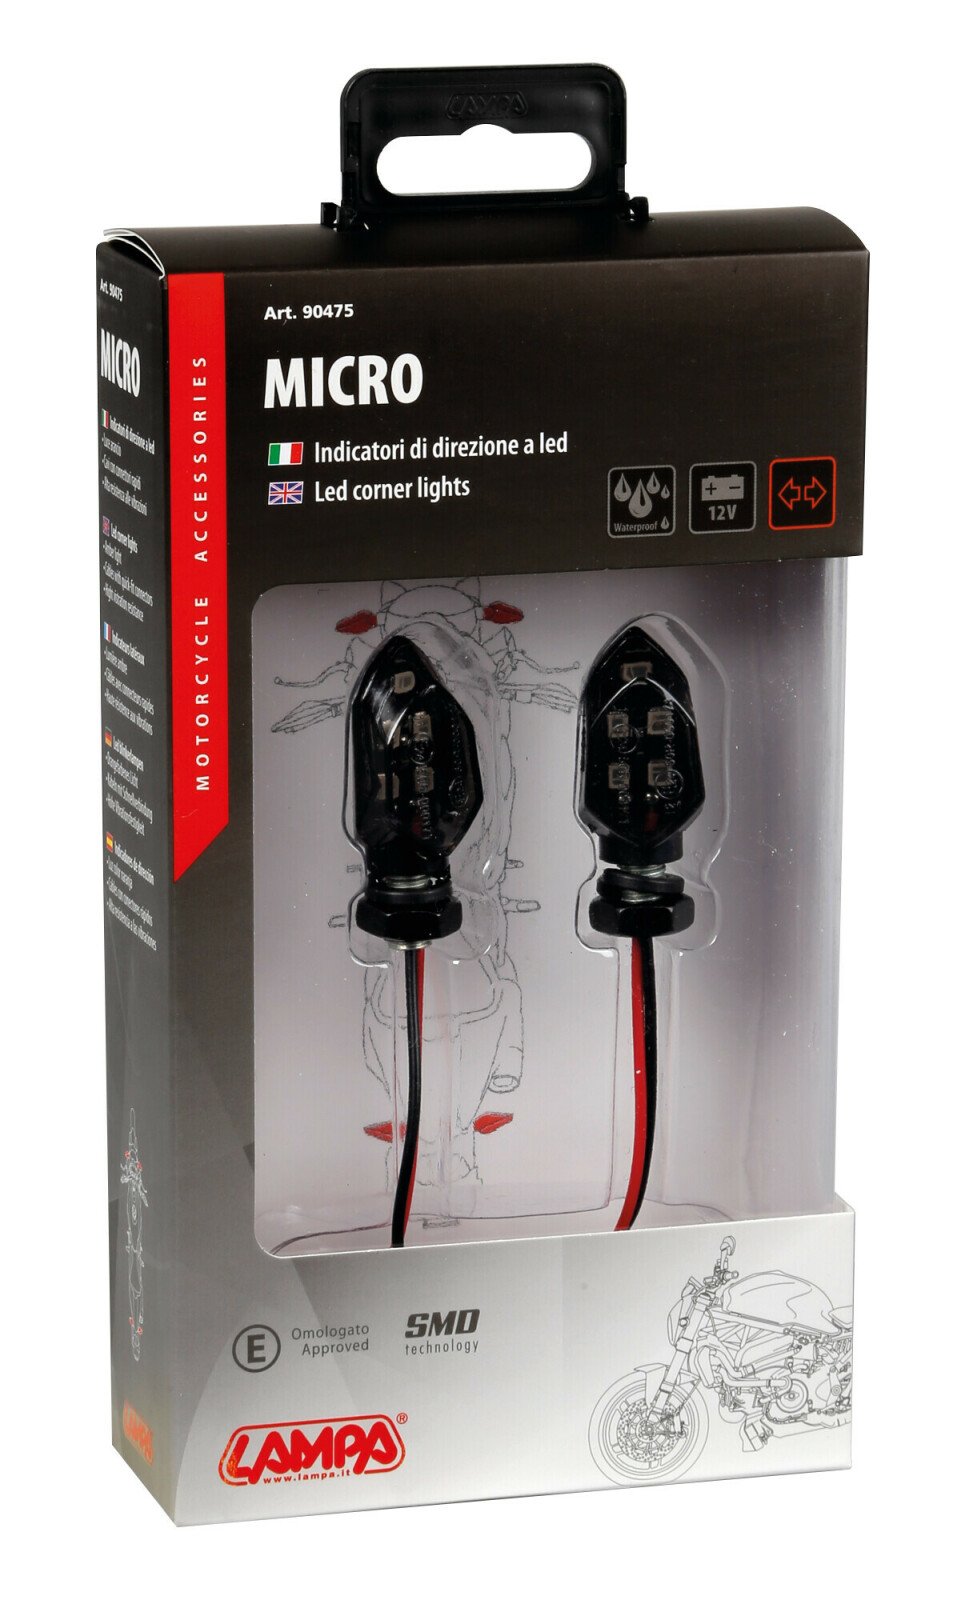 Micro, led corner lights - 12V LED-Resealed, thumb